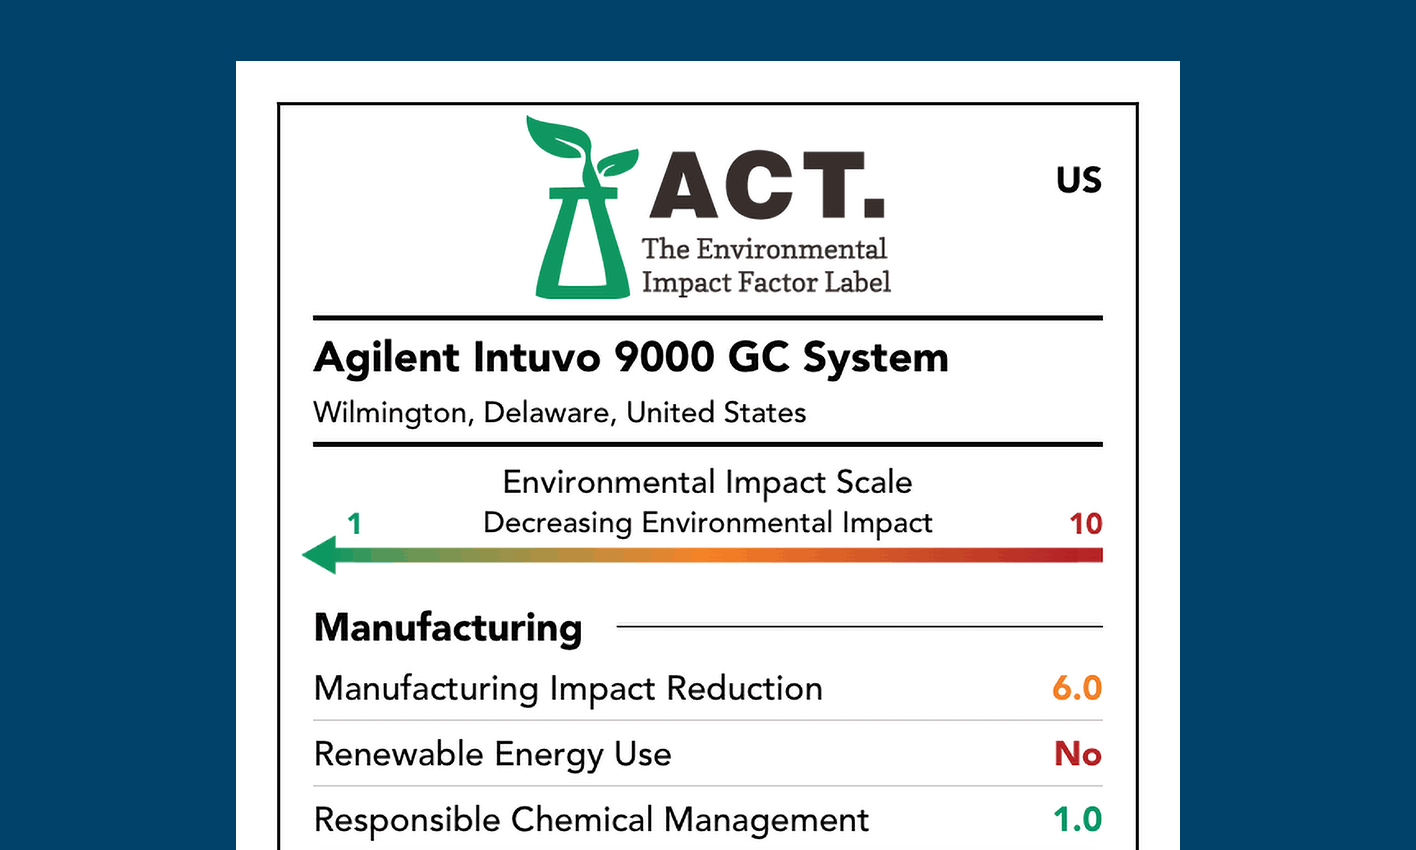 Agilent Intuvo 9000 GC System ACT label